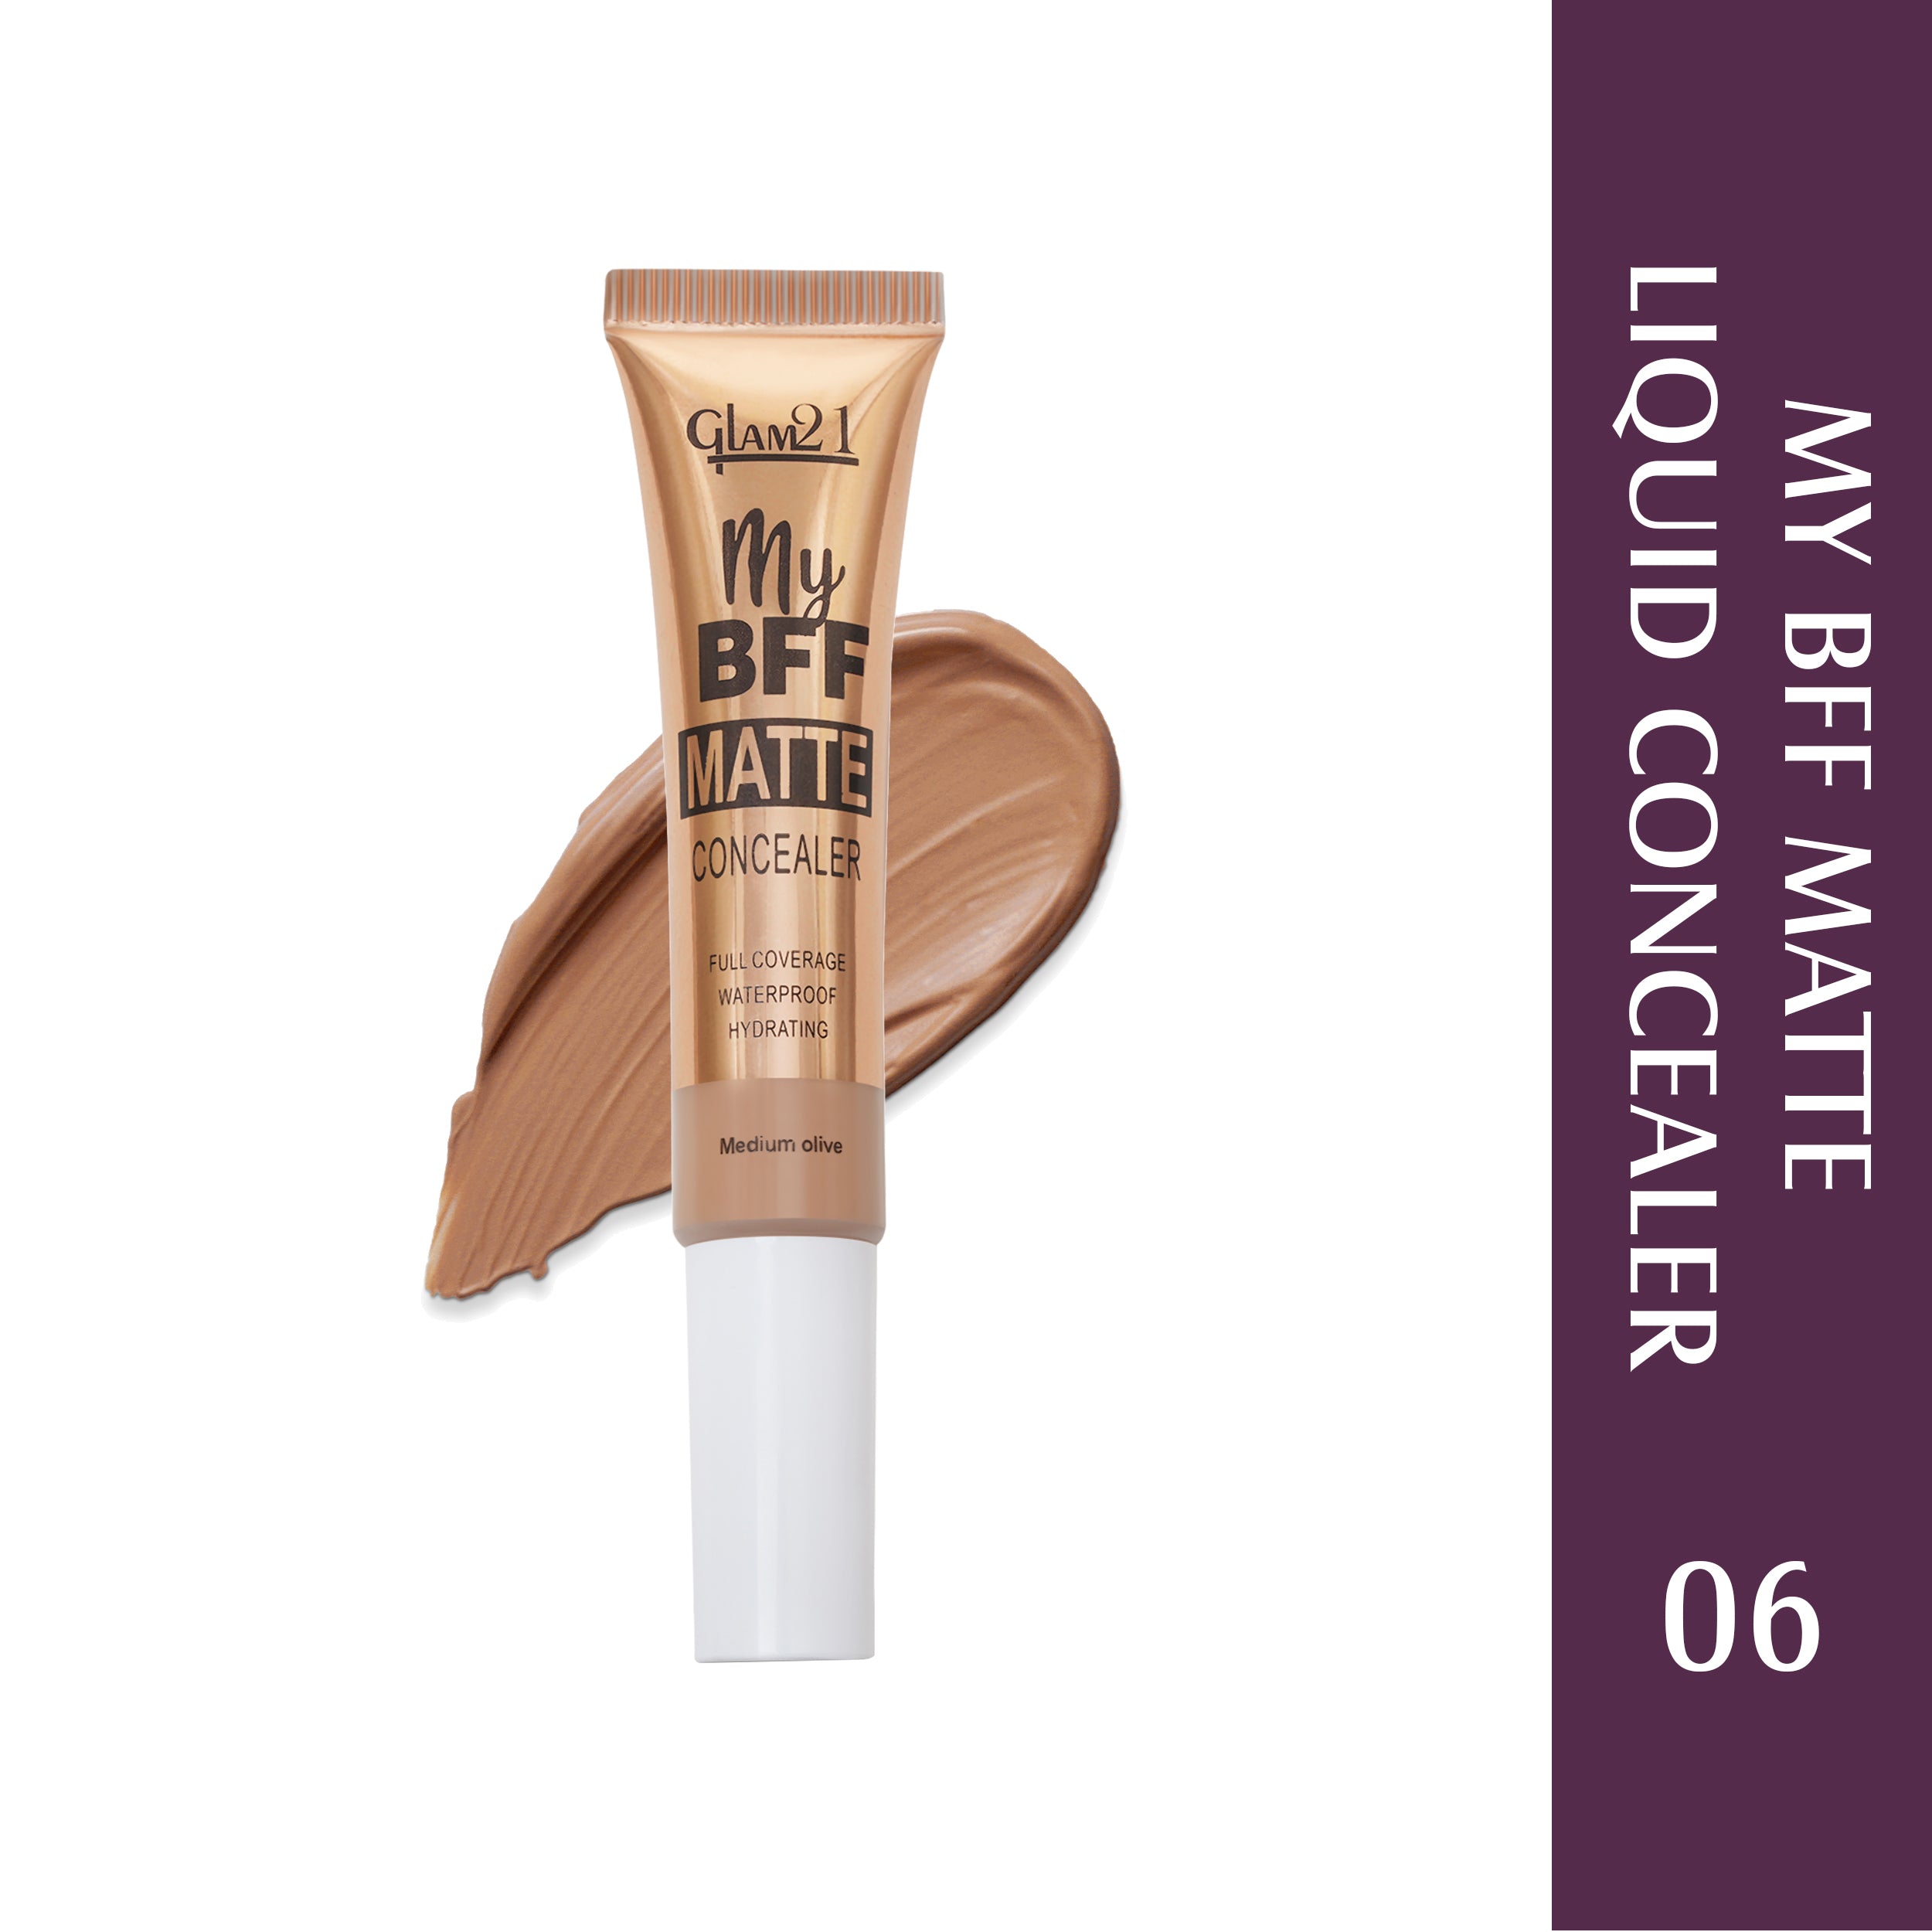 Glam21 My BFF Matte Liquid Concealer-Conceal,Contour,&Highlights Your Face|Matte Finish Concealer (Medium Olive, 8 g)